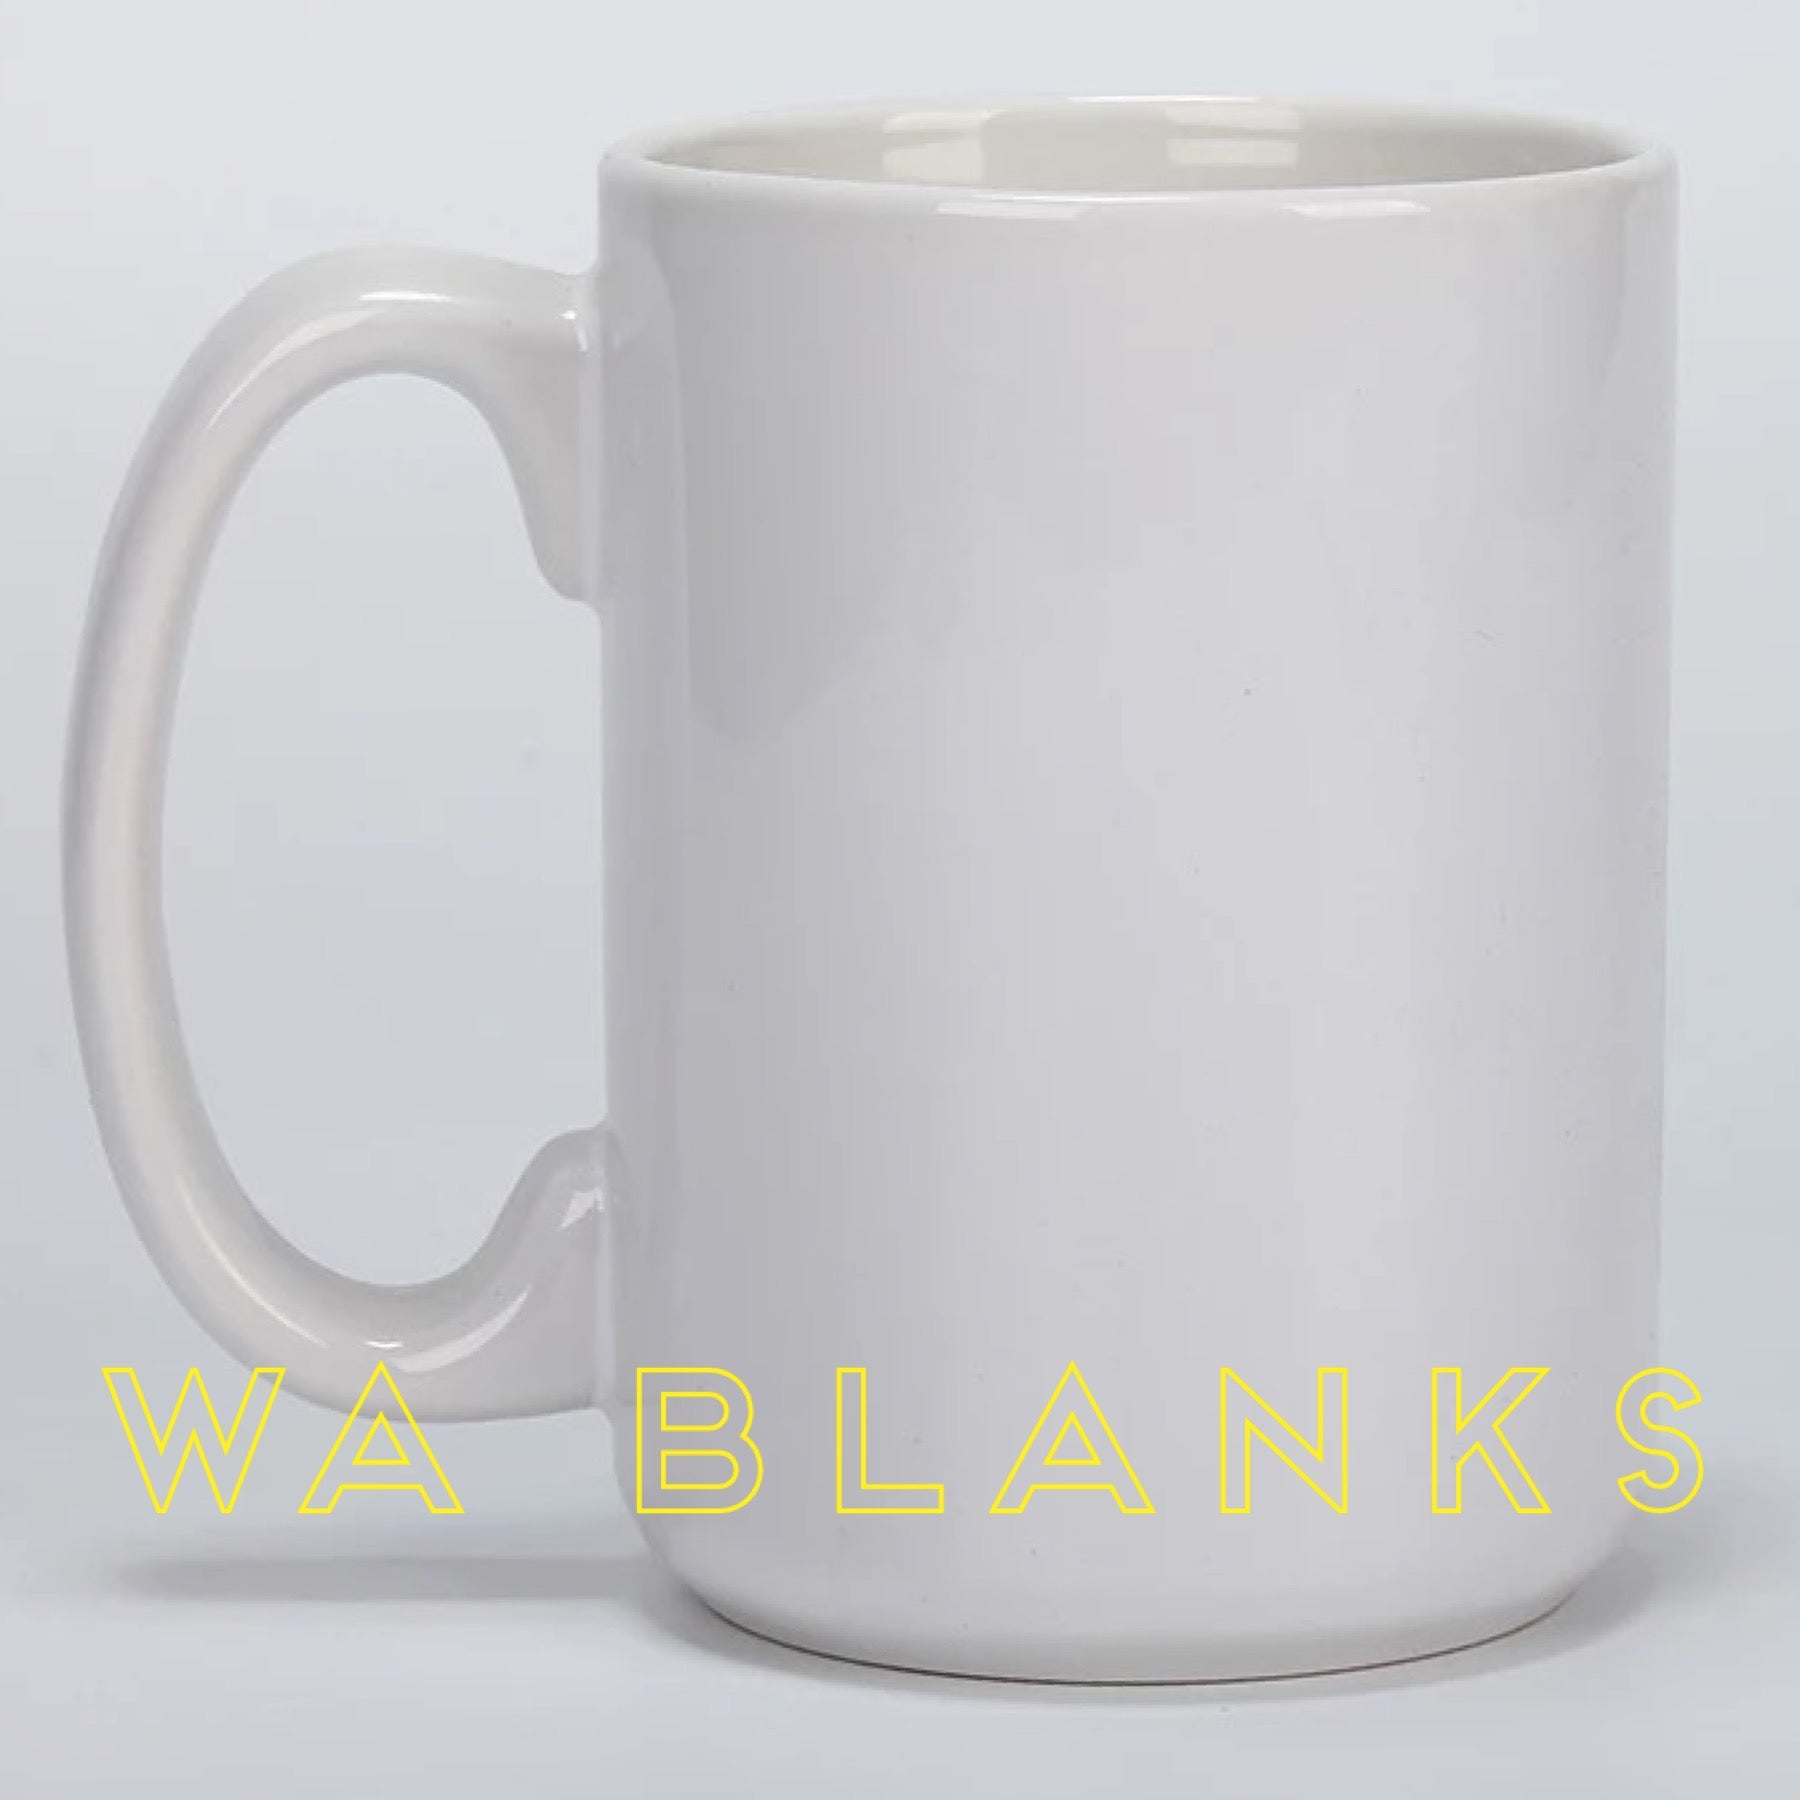 Sublimation Coffee Mega Mugs -15oz – WA Blanks